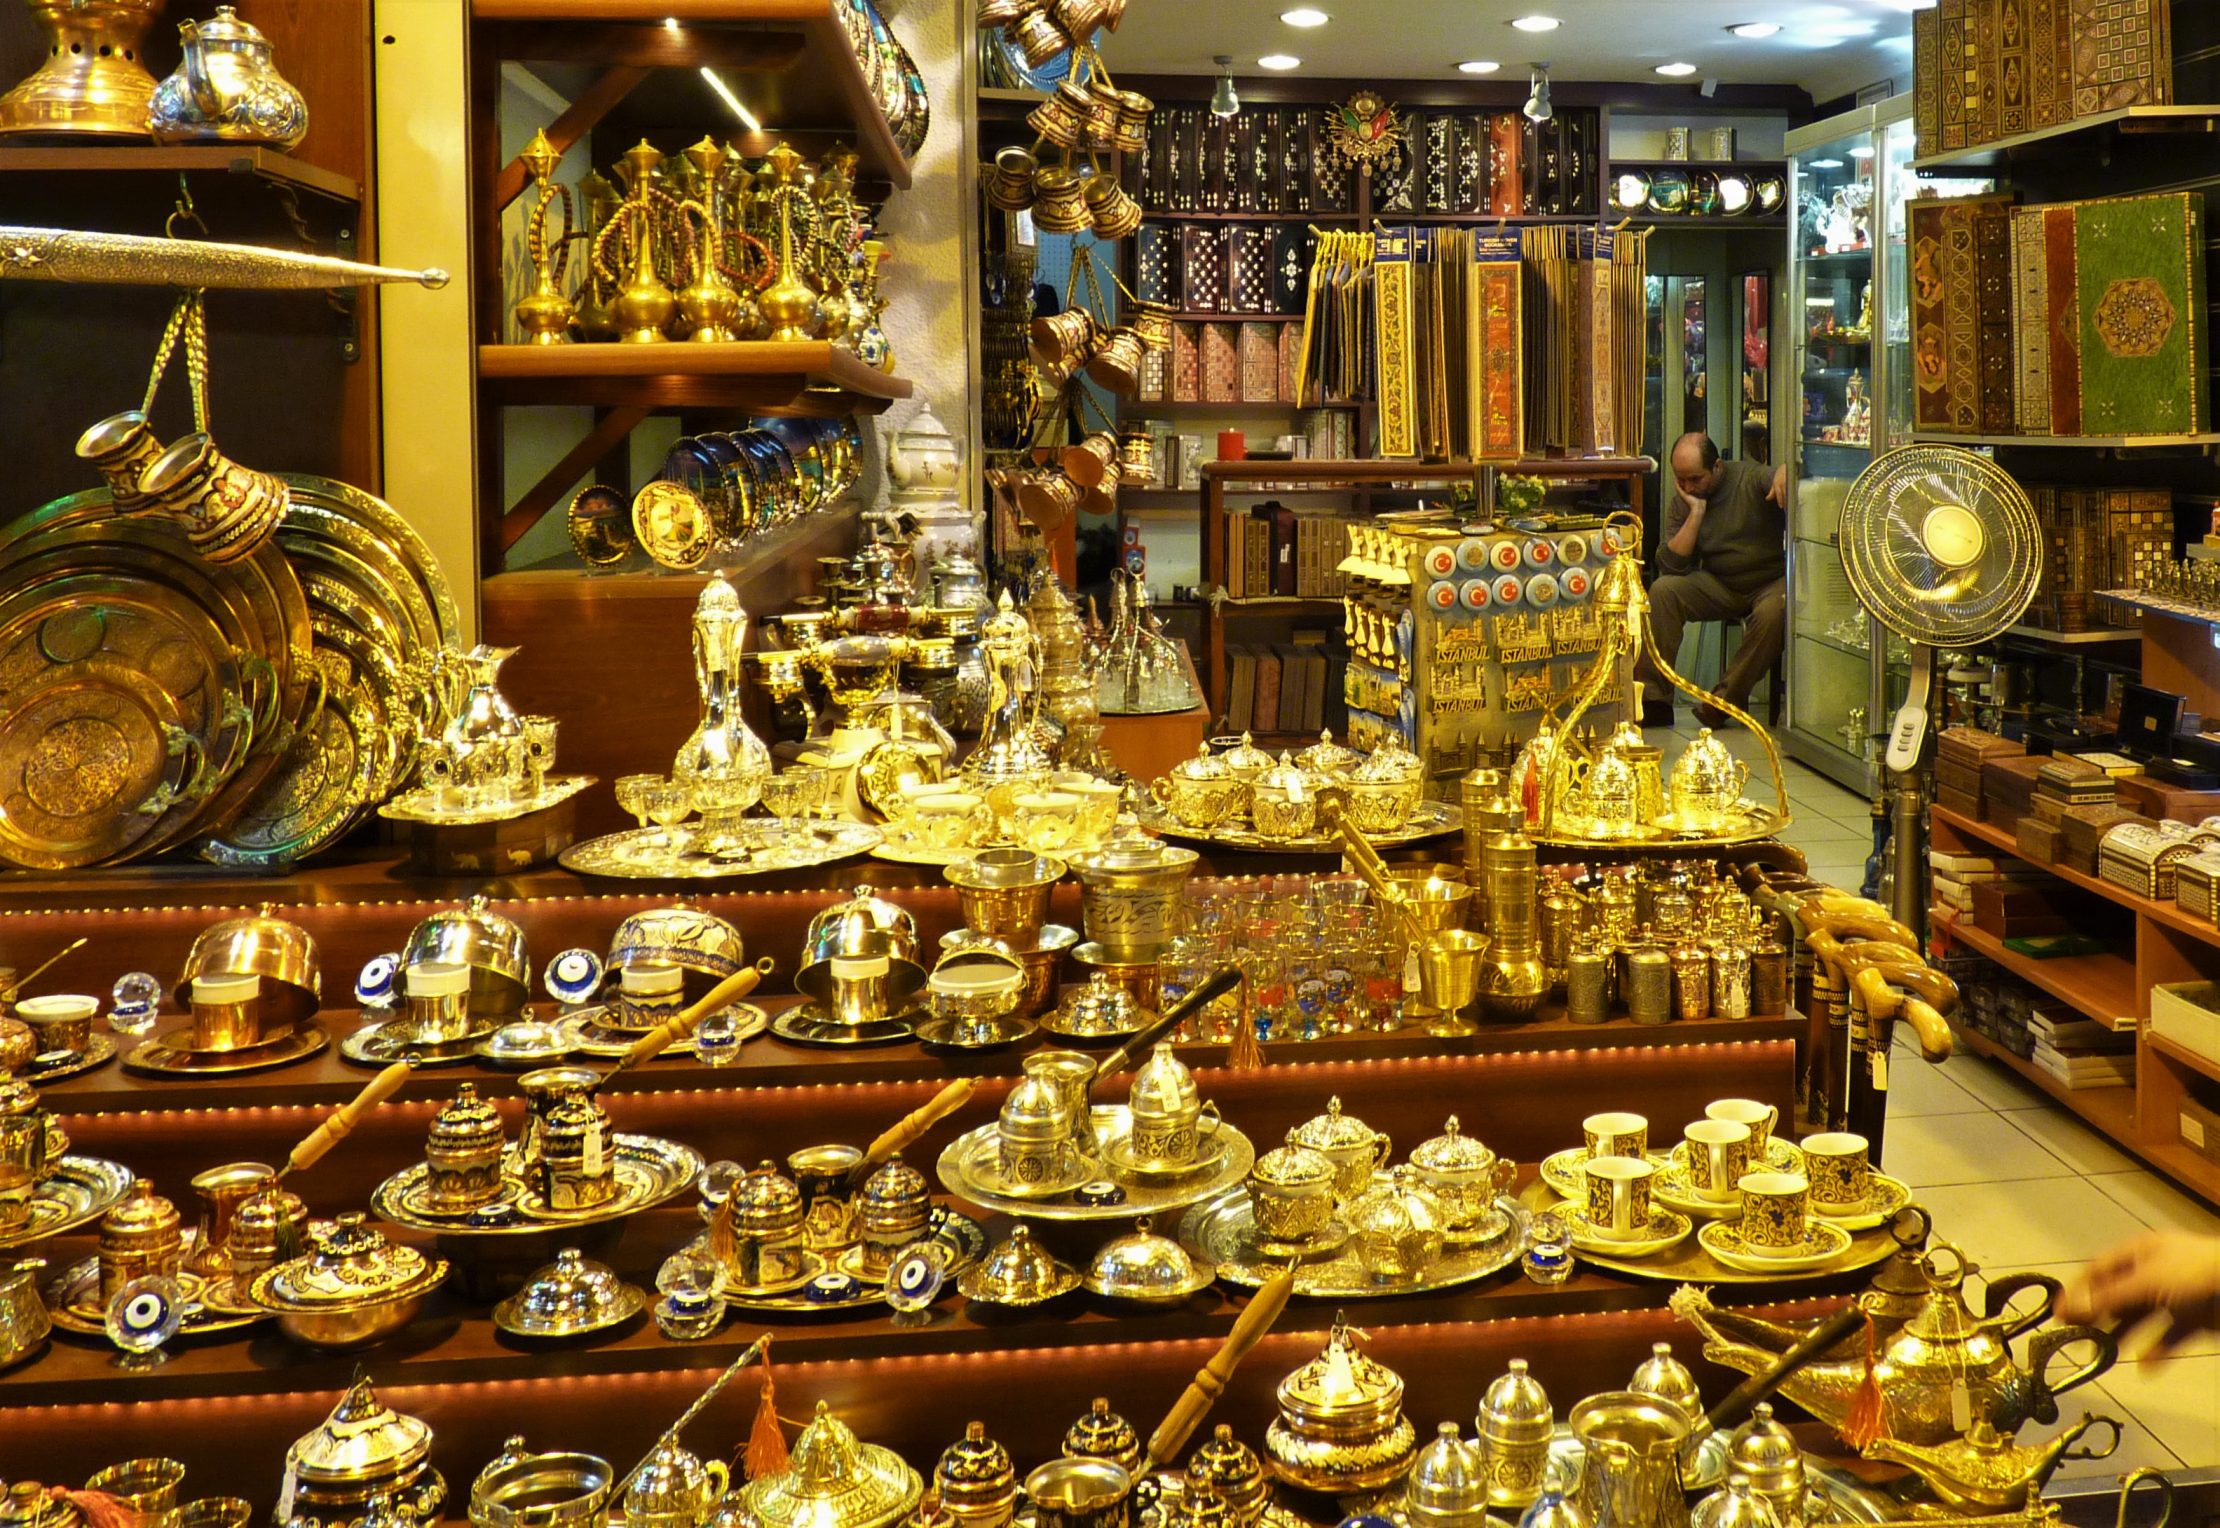 In Grand Bazaar in Istanbul